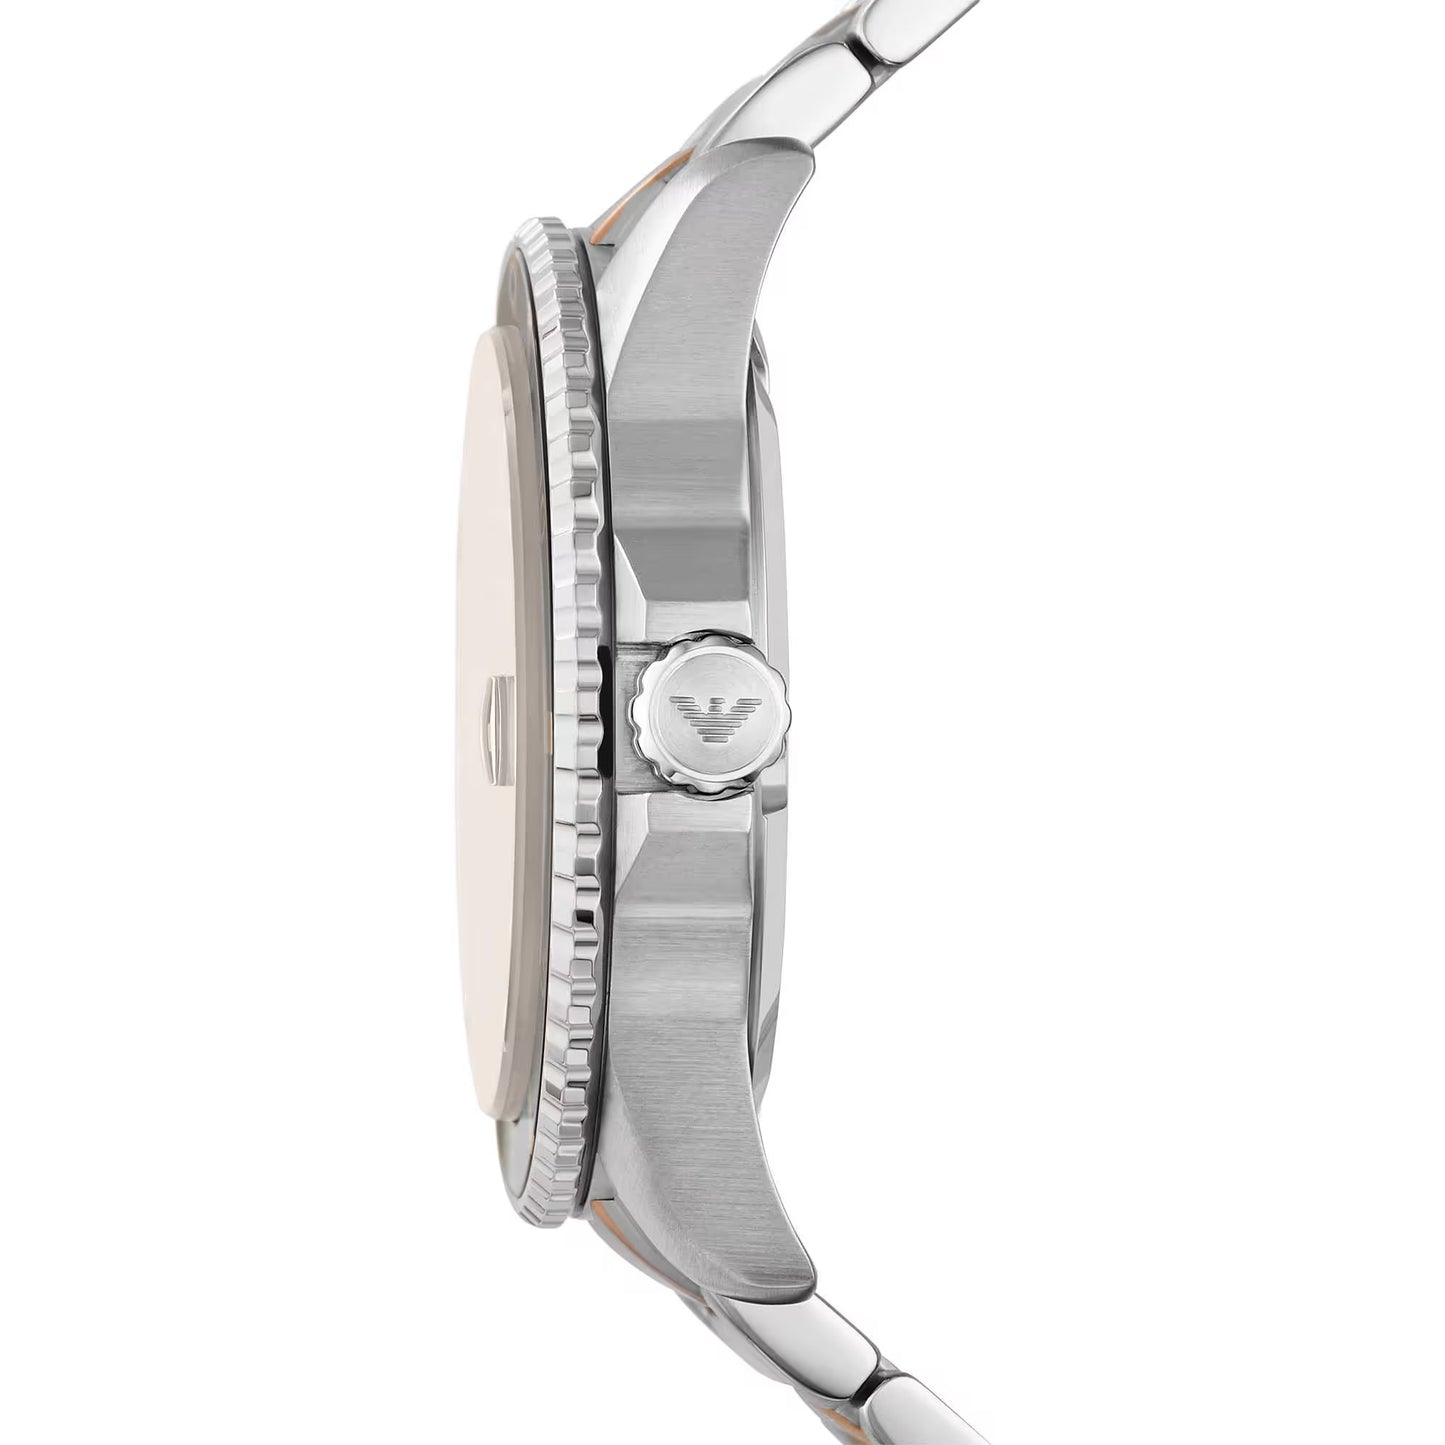 Emporio Armani Classic Steel Timepiece for Men